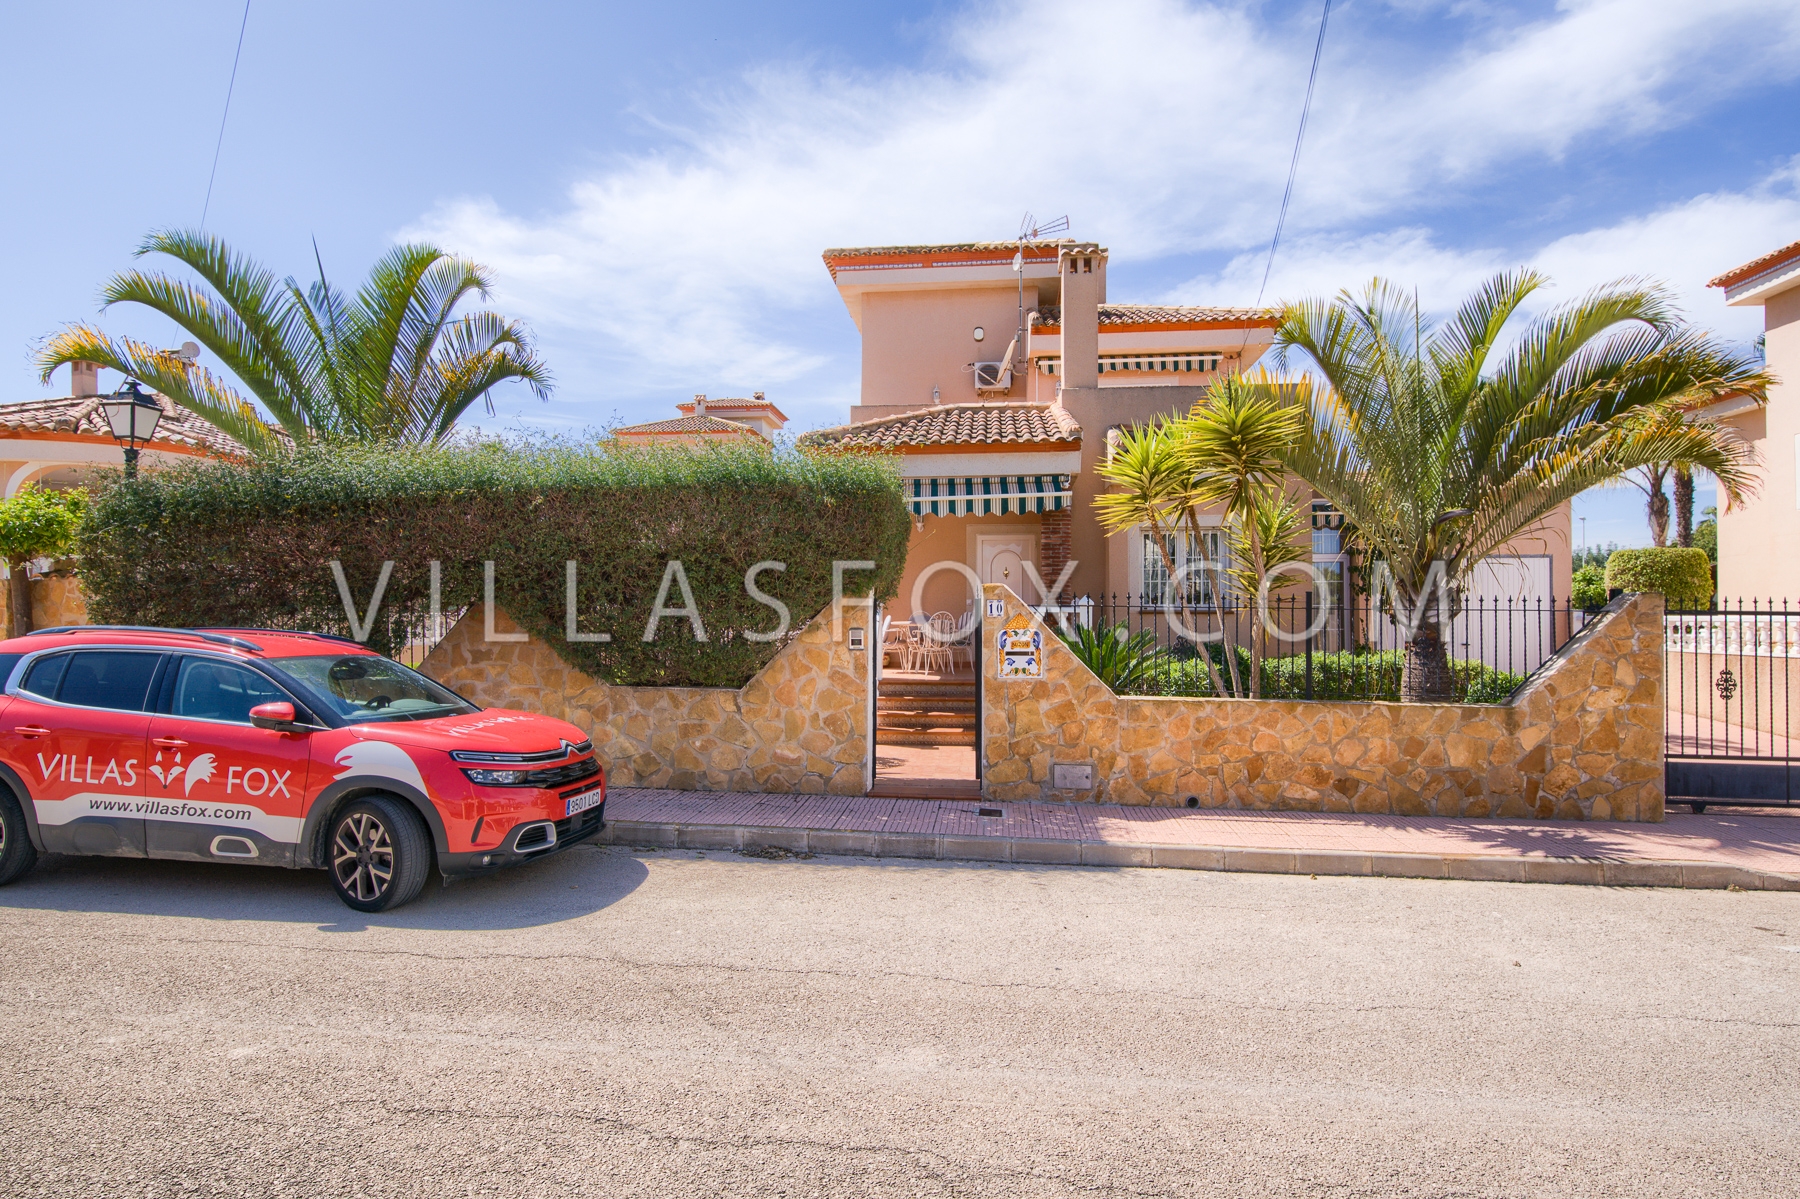 Torrestrella villa for sale, 3 bedrooms, private pool, garage